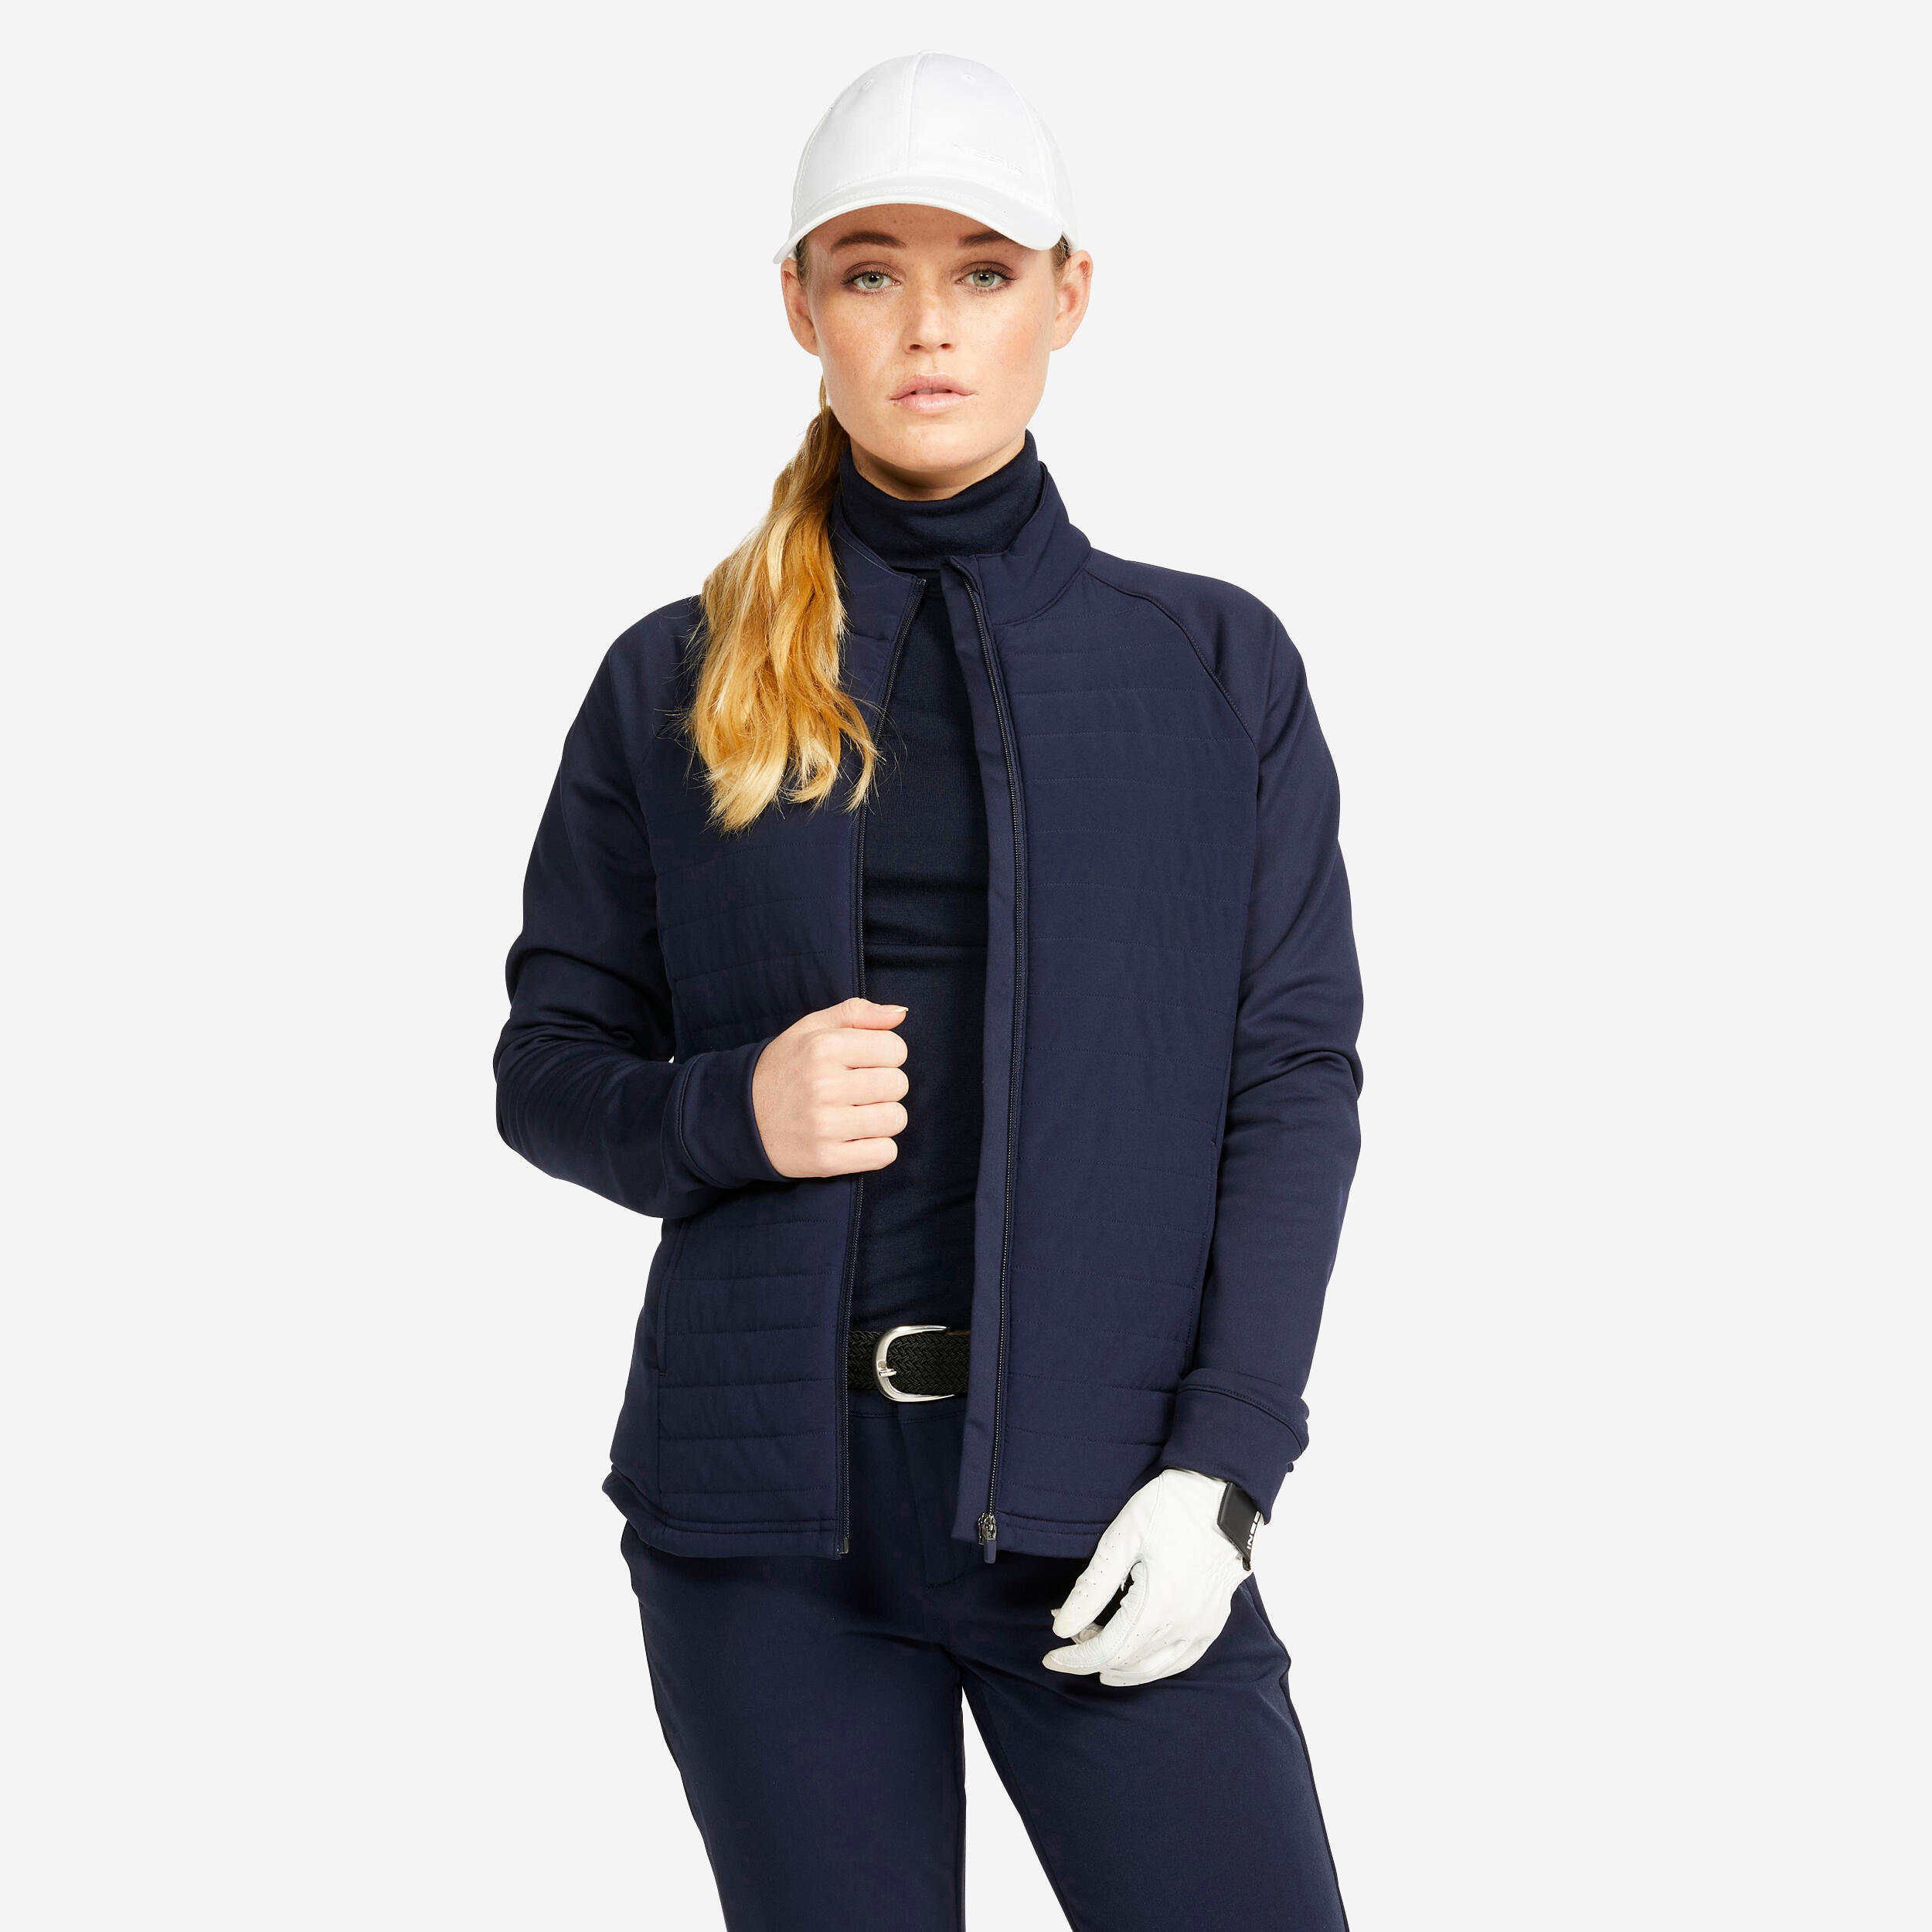 Women's winter golf jacket - CW500 navy blue 1/5